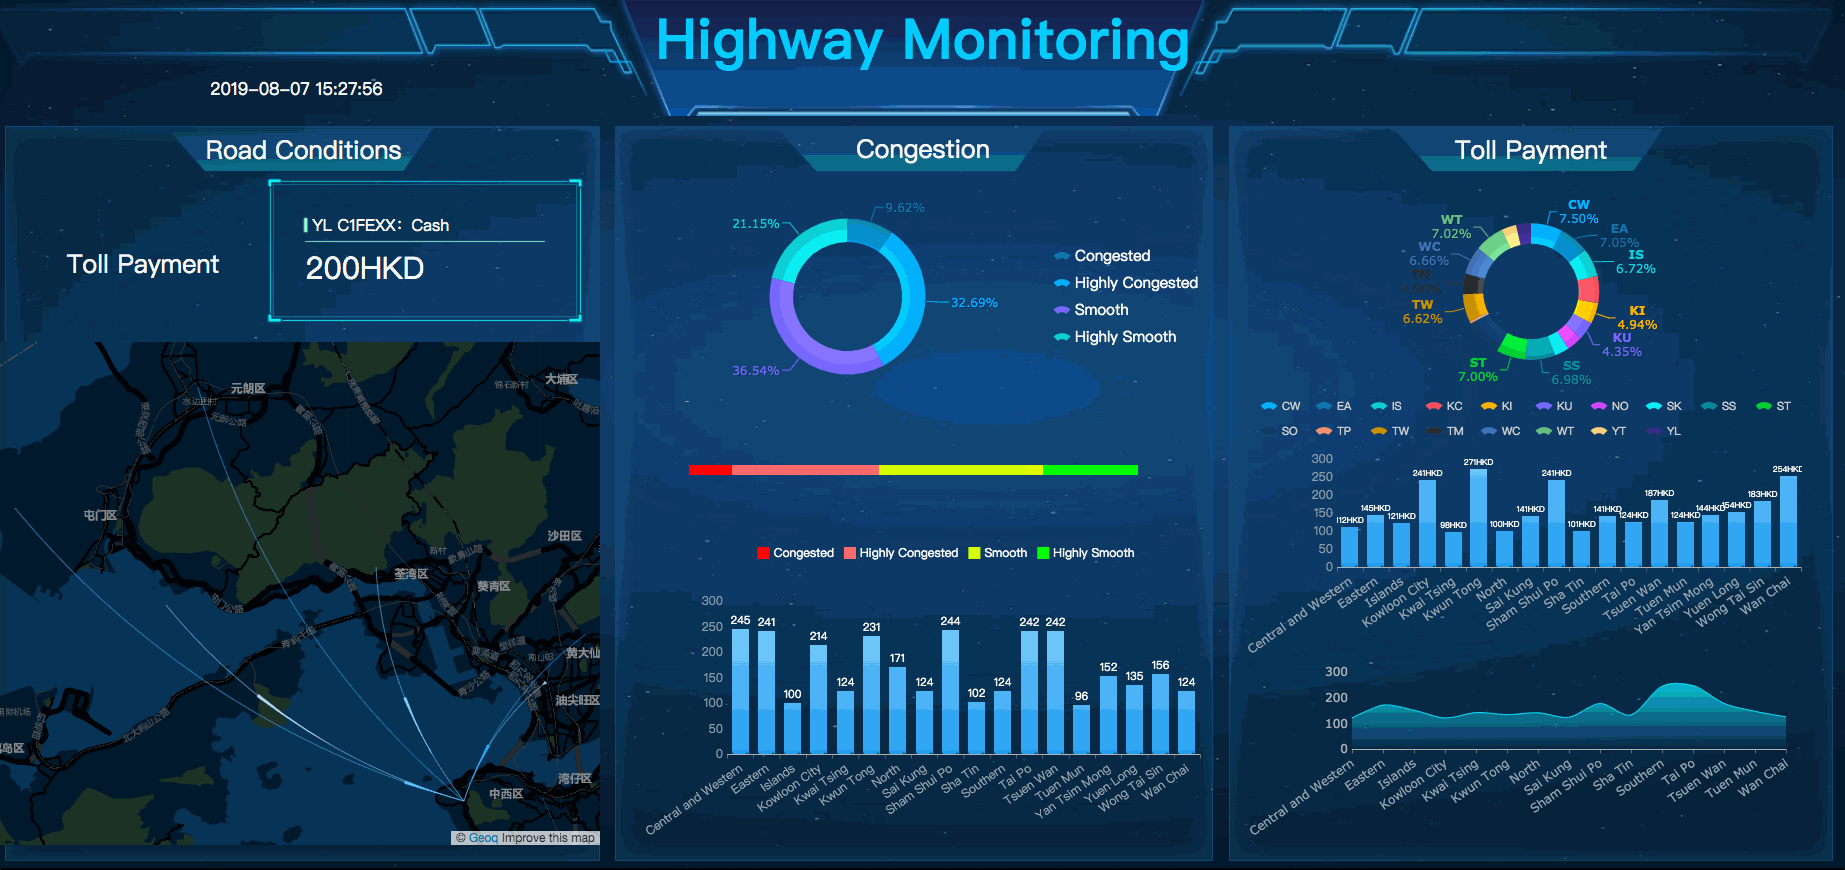 Highway Monitoring Dashboard